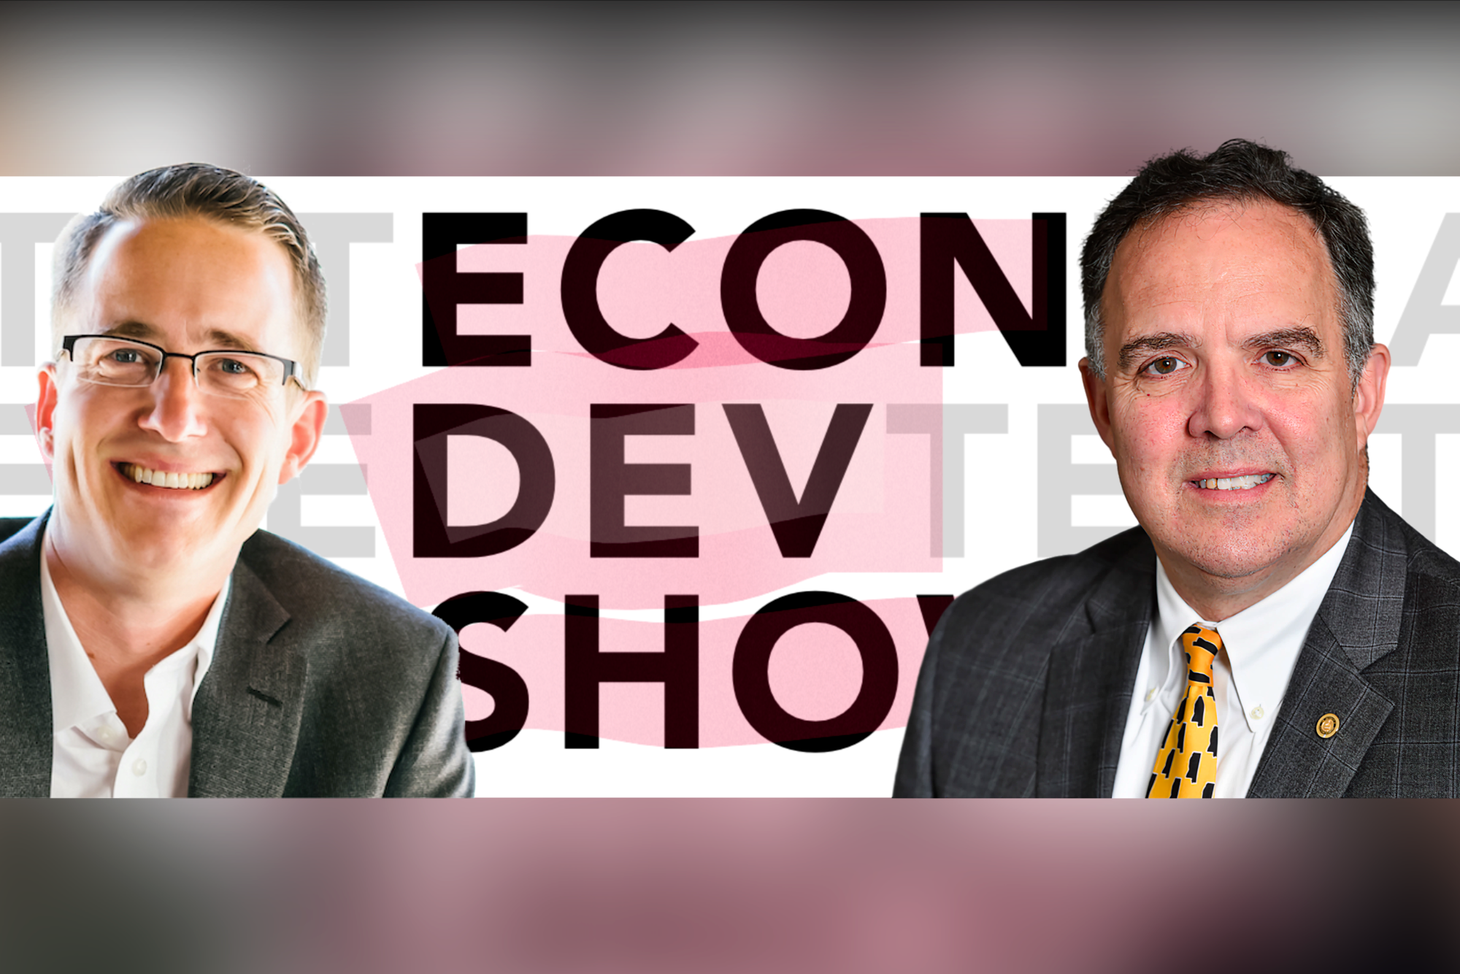 Podcast Episode # 104 - Nurturing the Next Generation: Dr. Chad Miller's Vision for Economic Development's Future